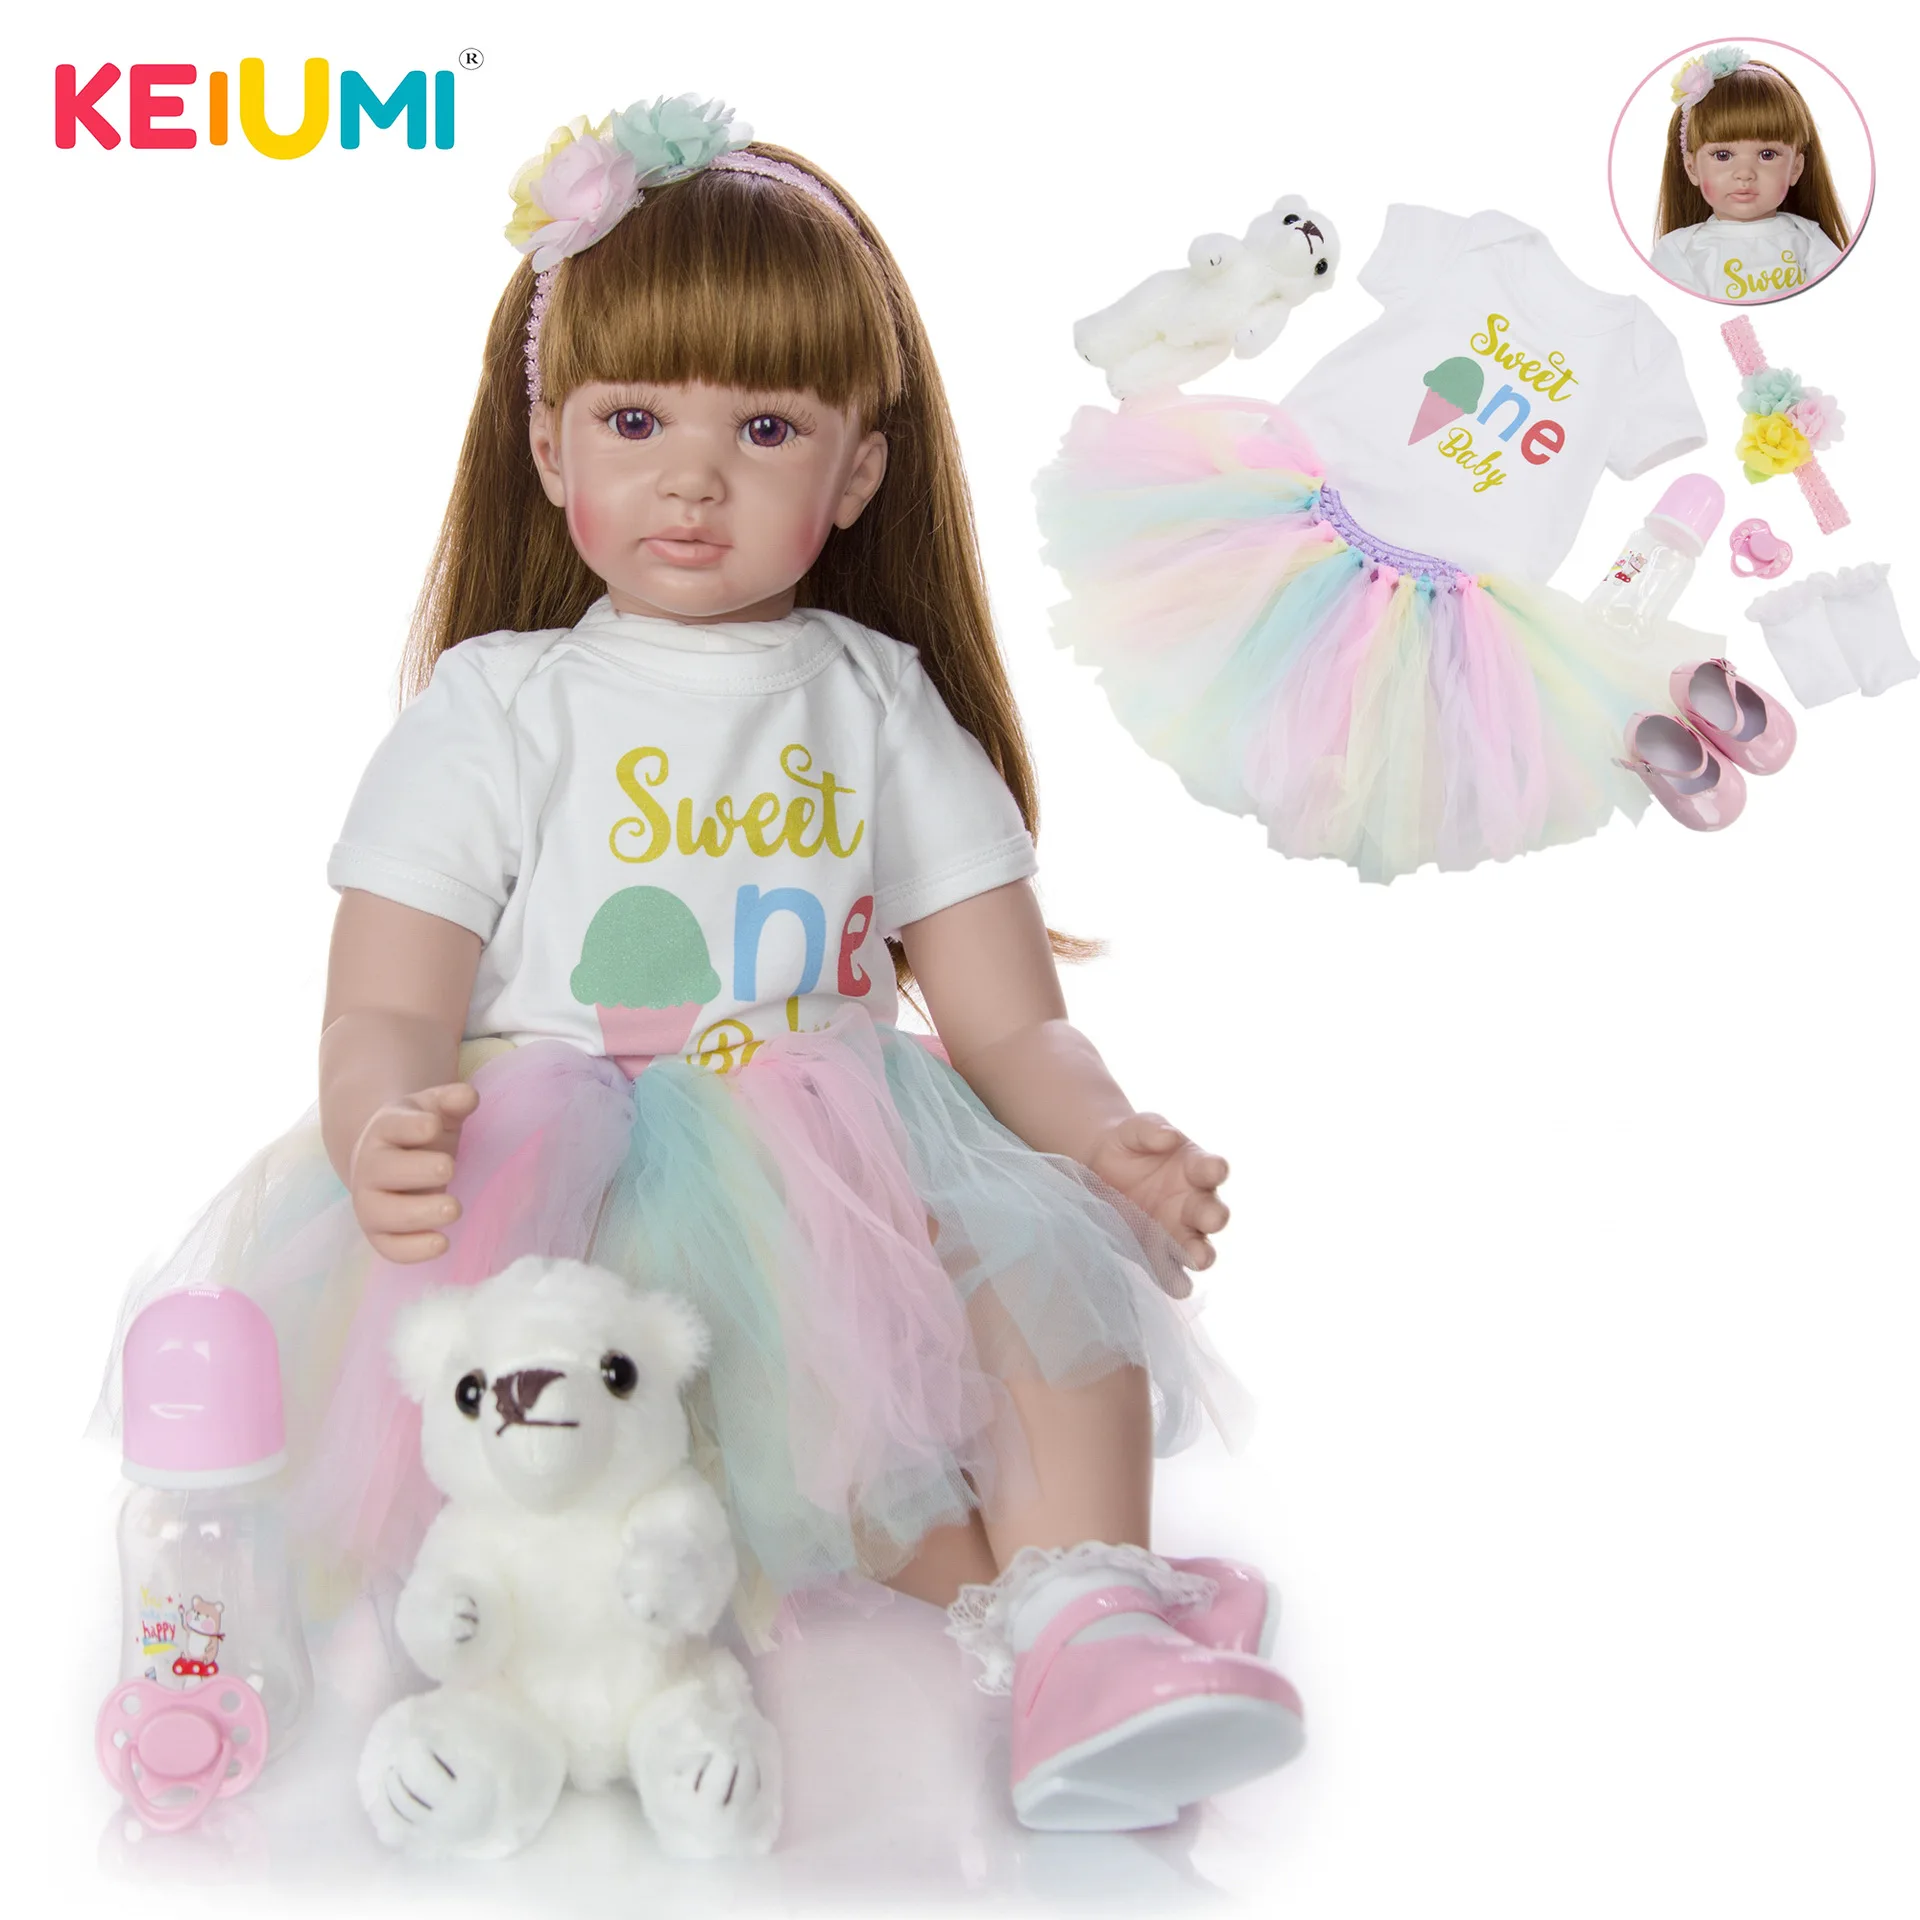  Keiumi 24-Inch Reborn Baby Doll Reborn Baby Cloth Body Model Infant AliExpress New Style